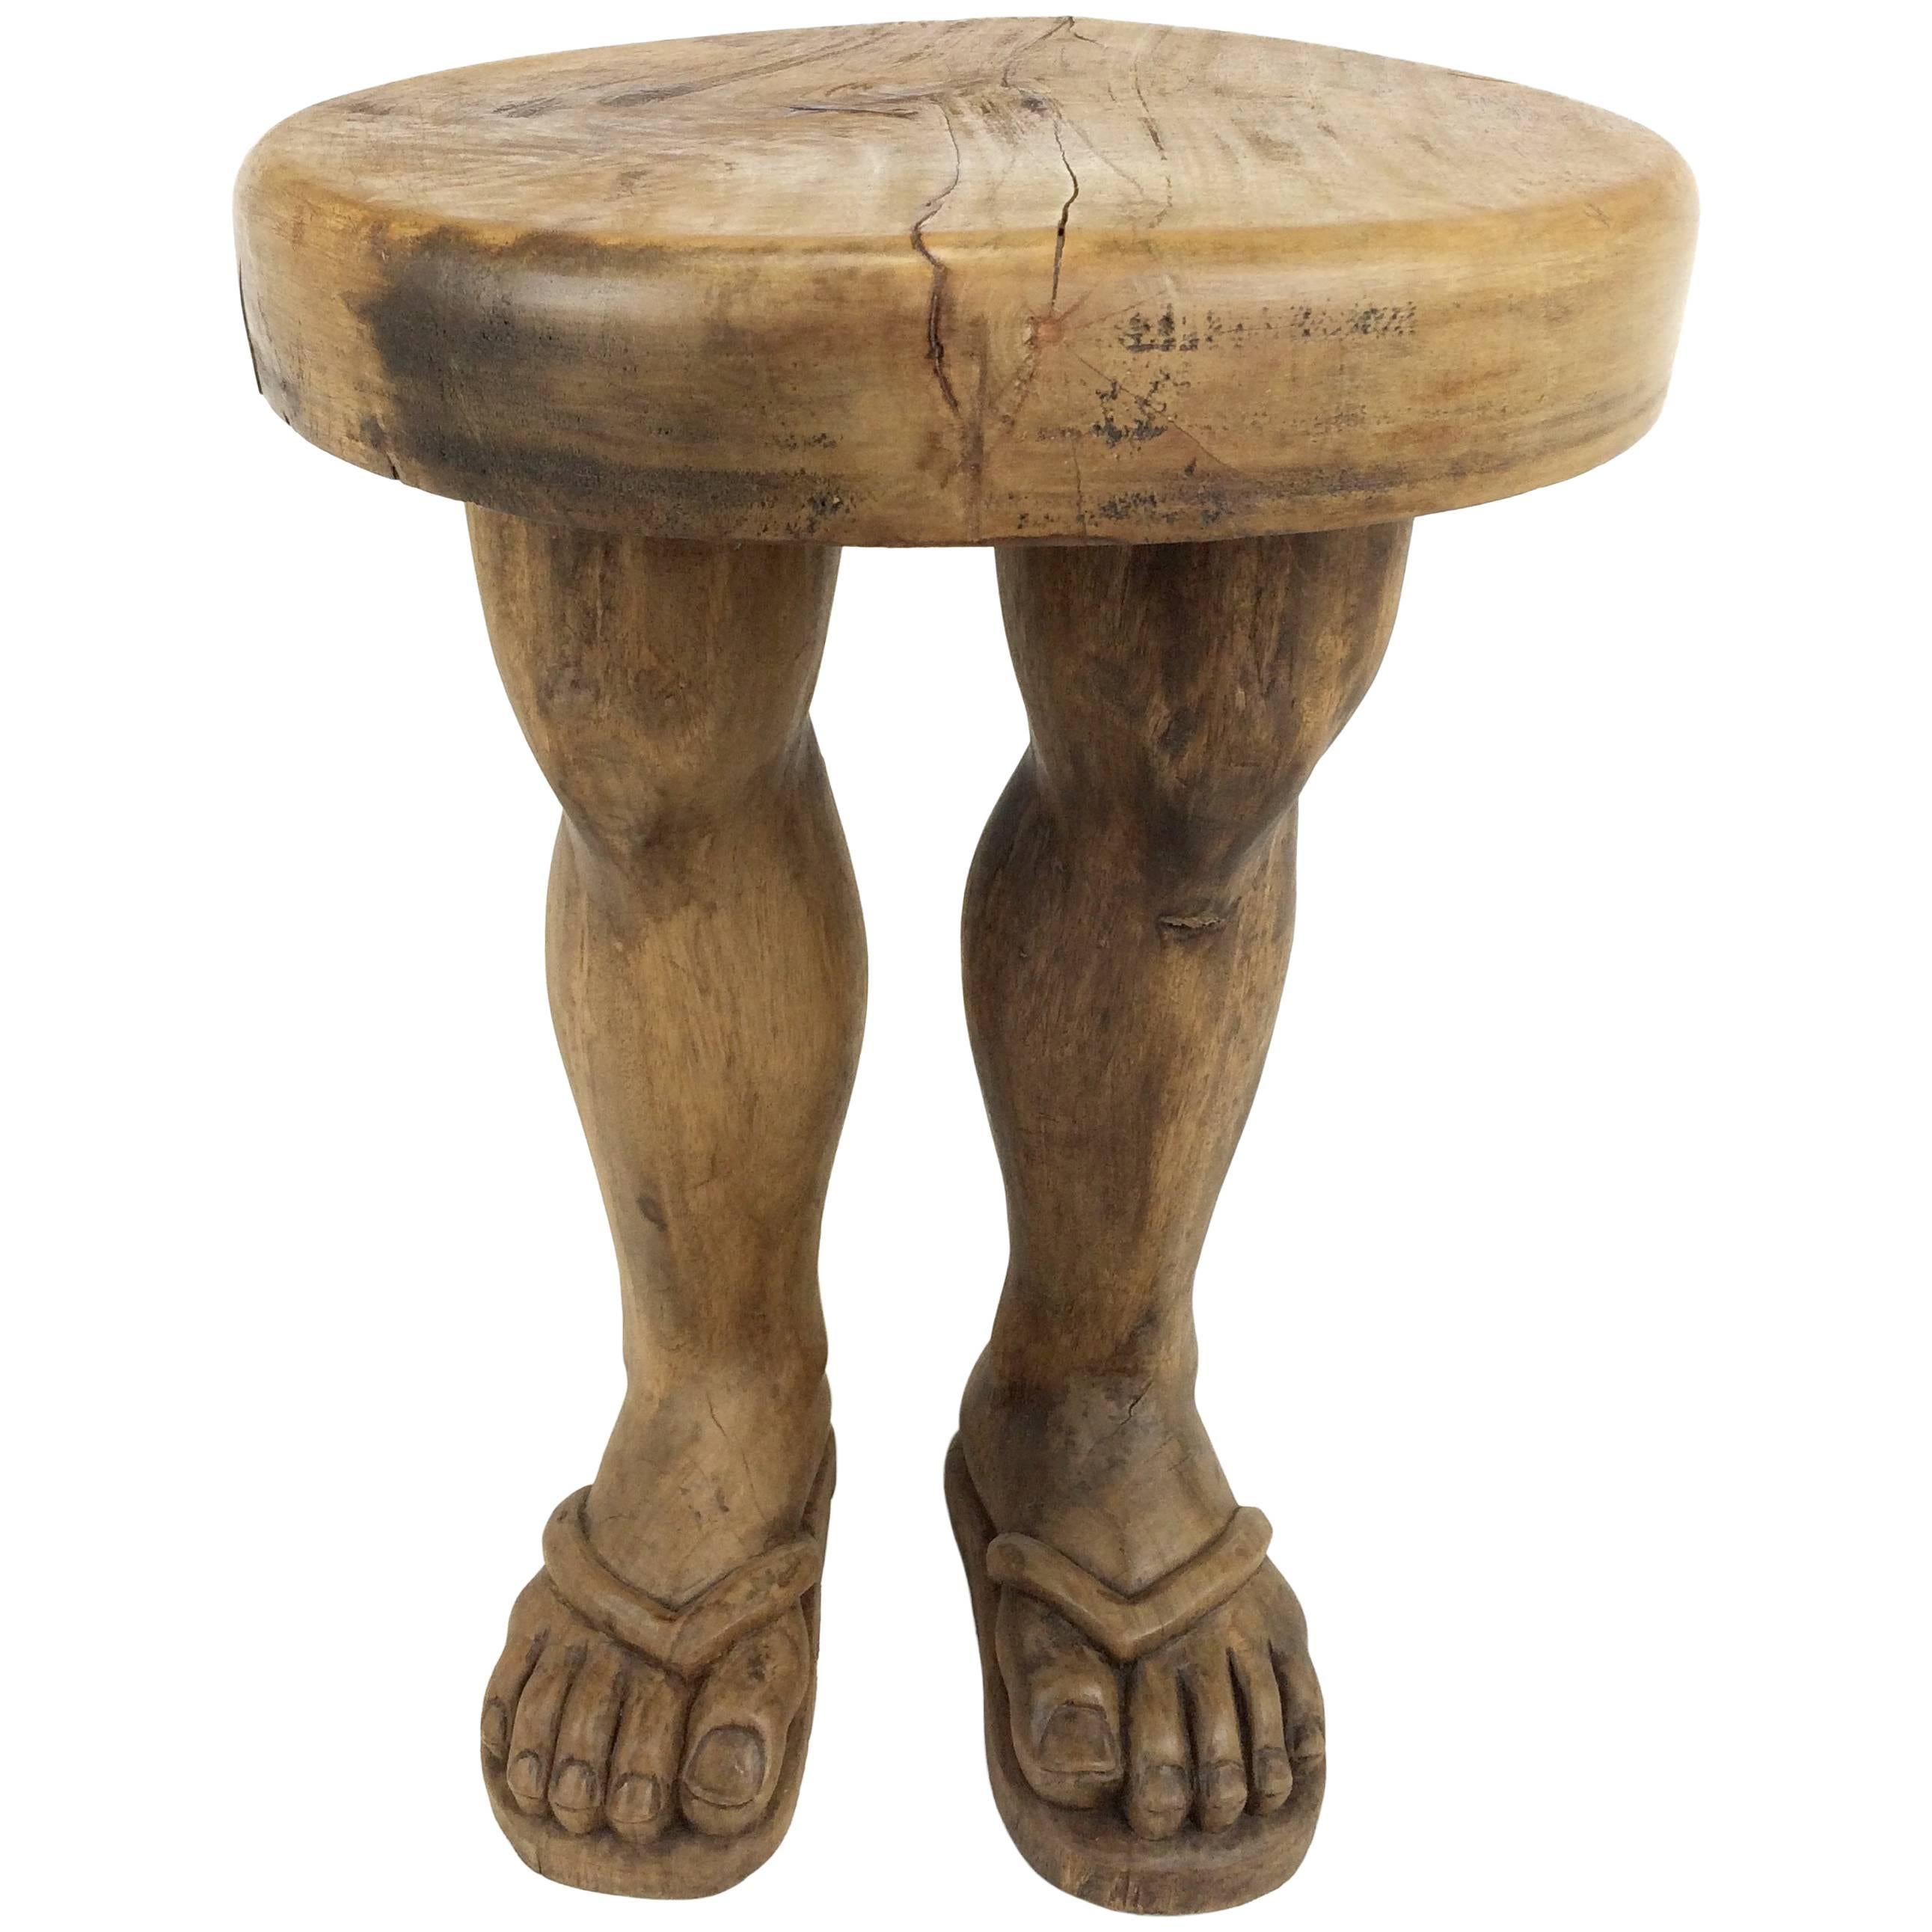 Hand-Carved Solid Wood Folk Art "Foot" Stool